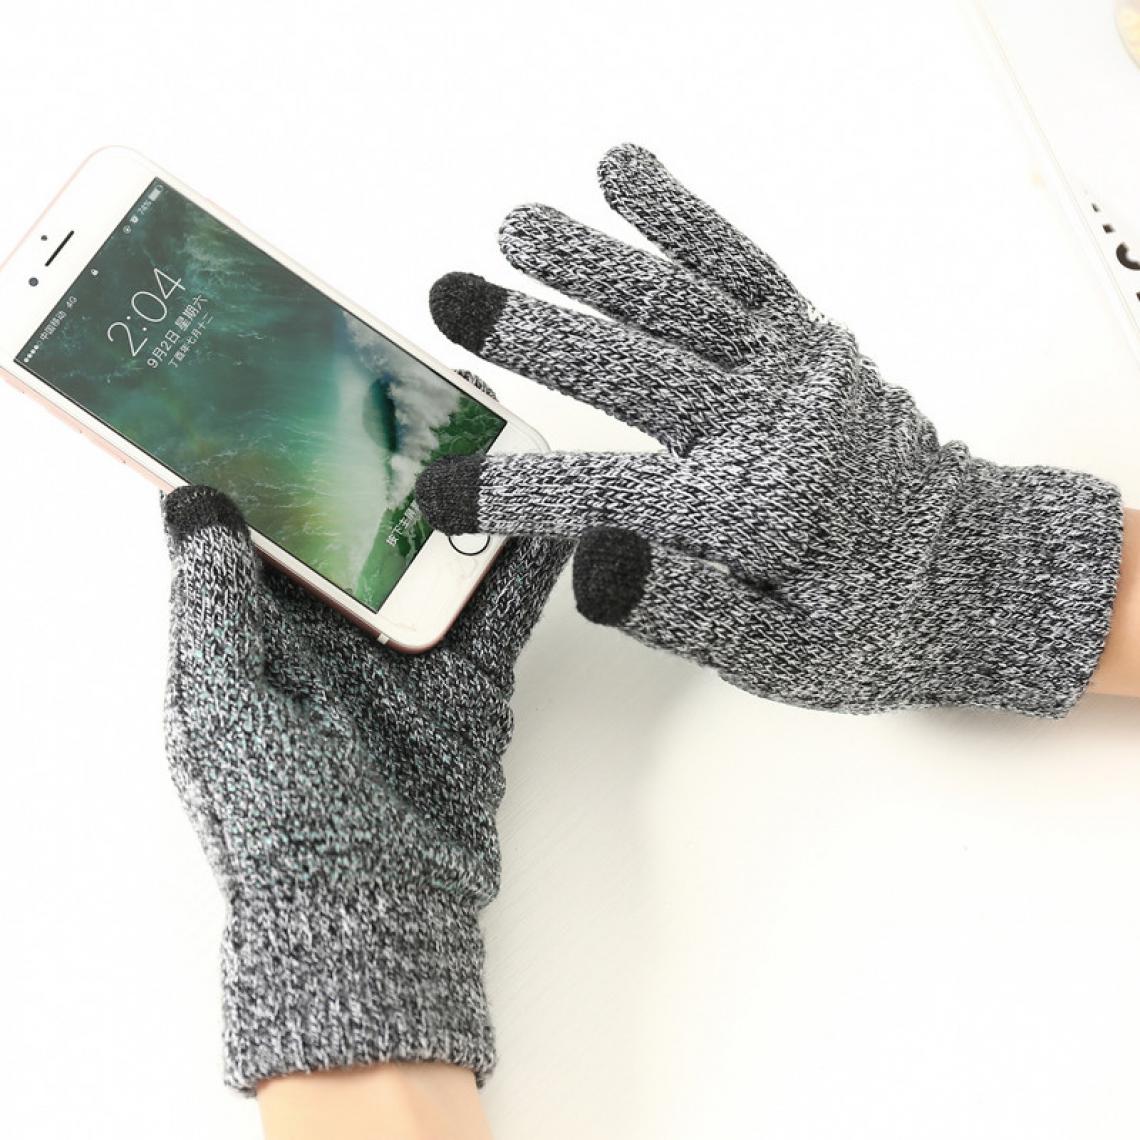 Shot - Gants Homme tactiles pour SAMSUNG Galaxy Note 20 Ultra Smartphone Taille M 3 doigts Hiver (GRIS) - Autres accessoires smartphone